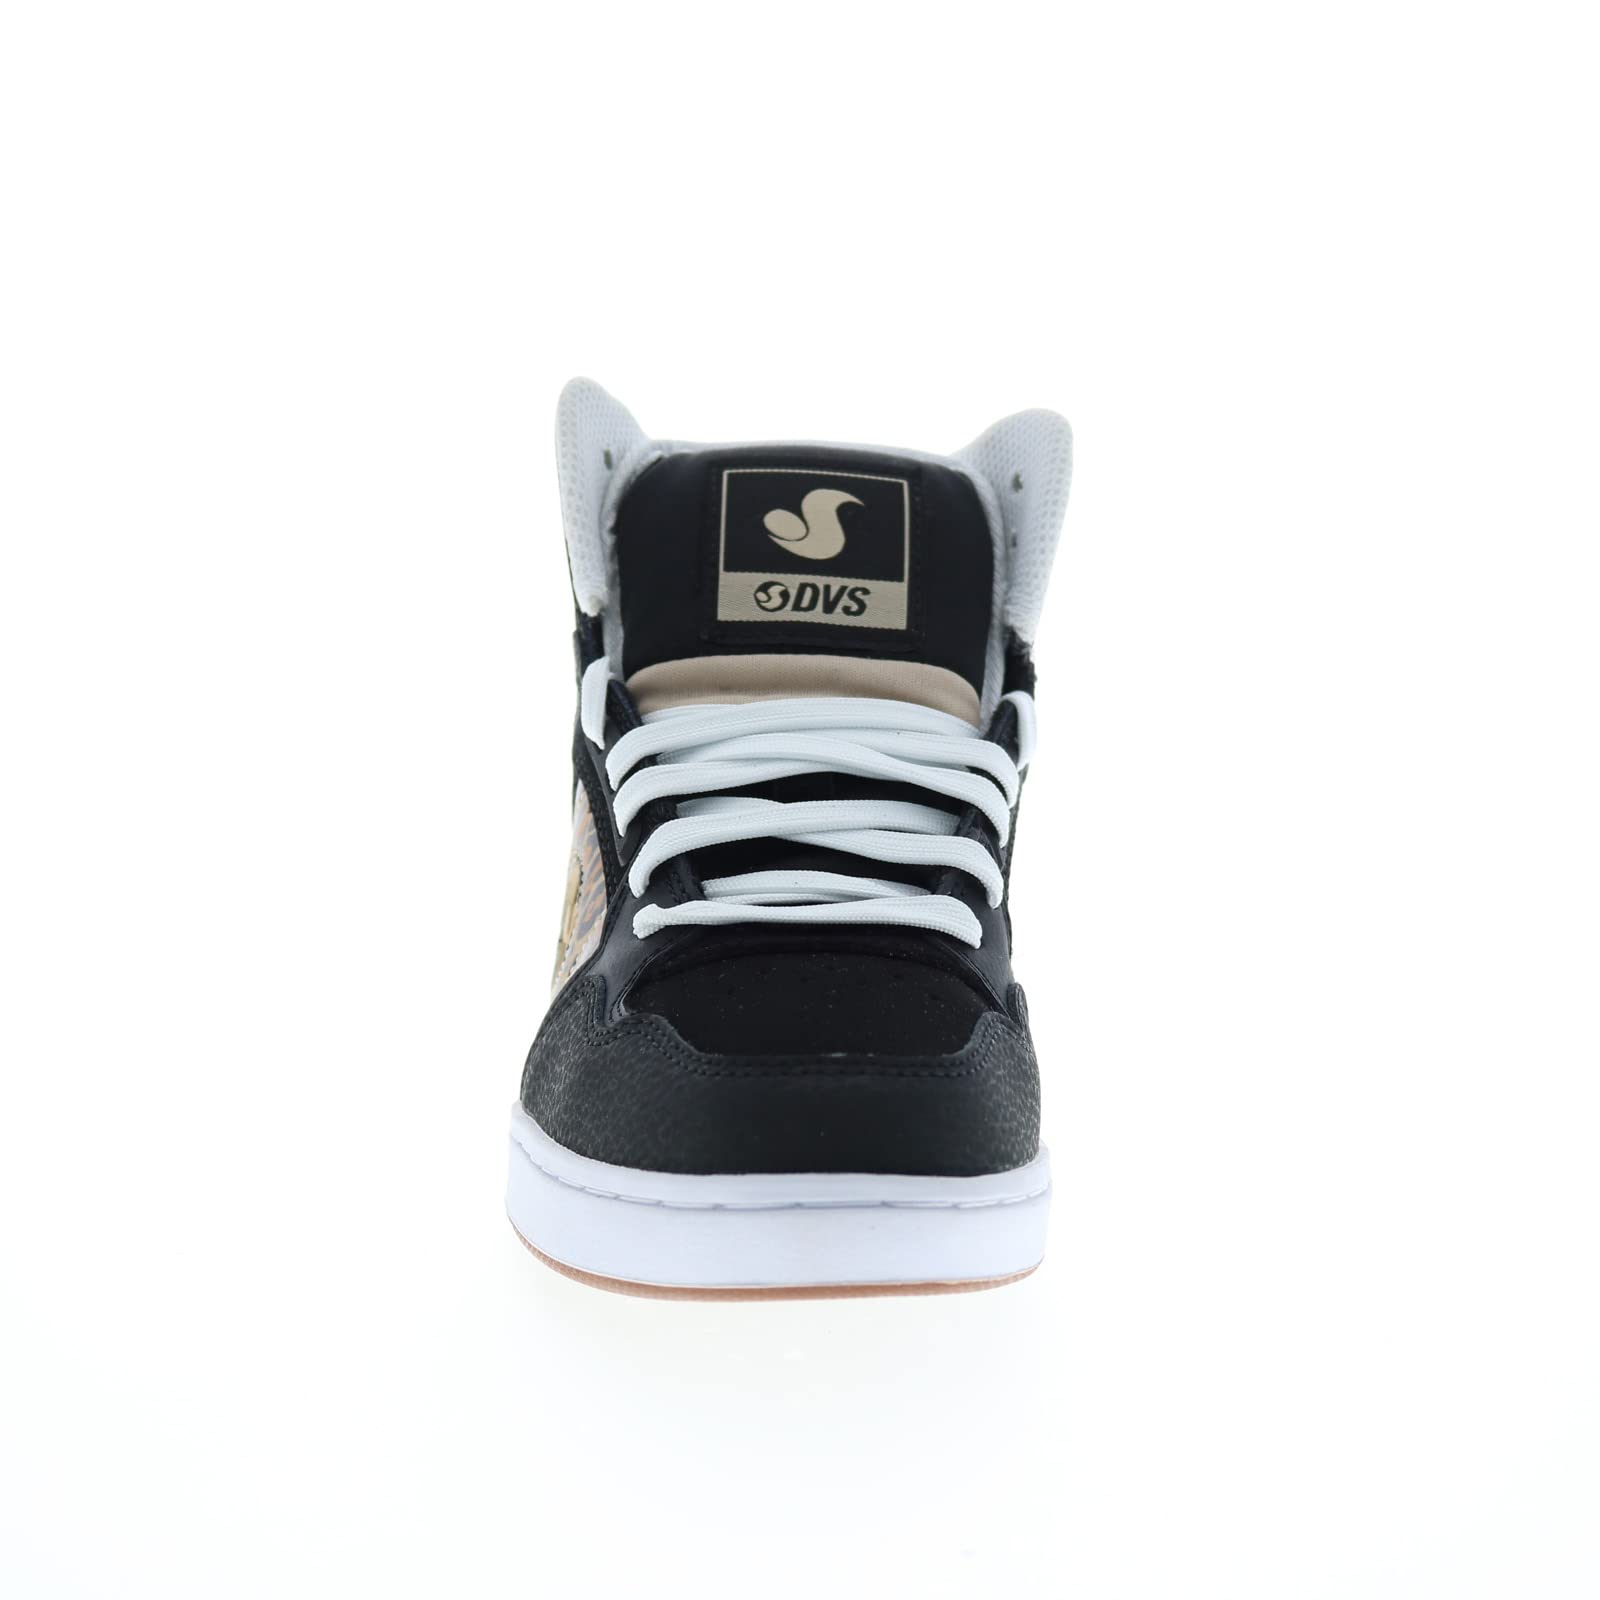 DVS Women's Honcho Skate Shoe, Black White Printed, 5.5